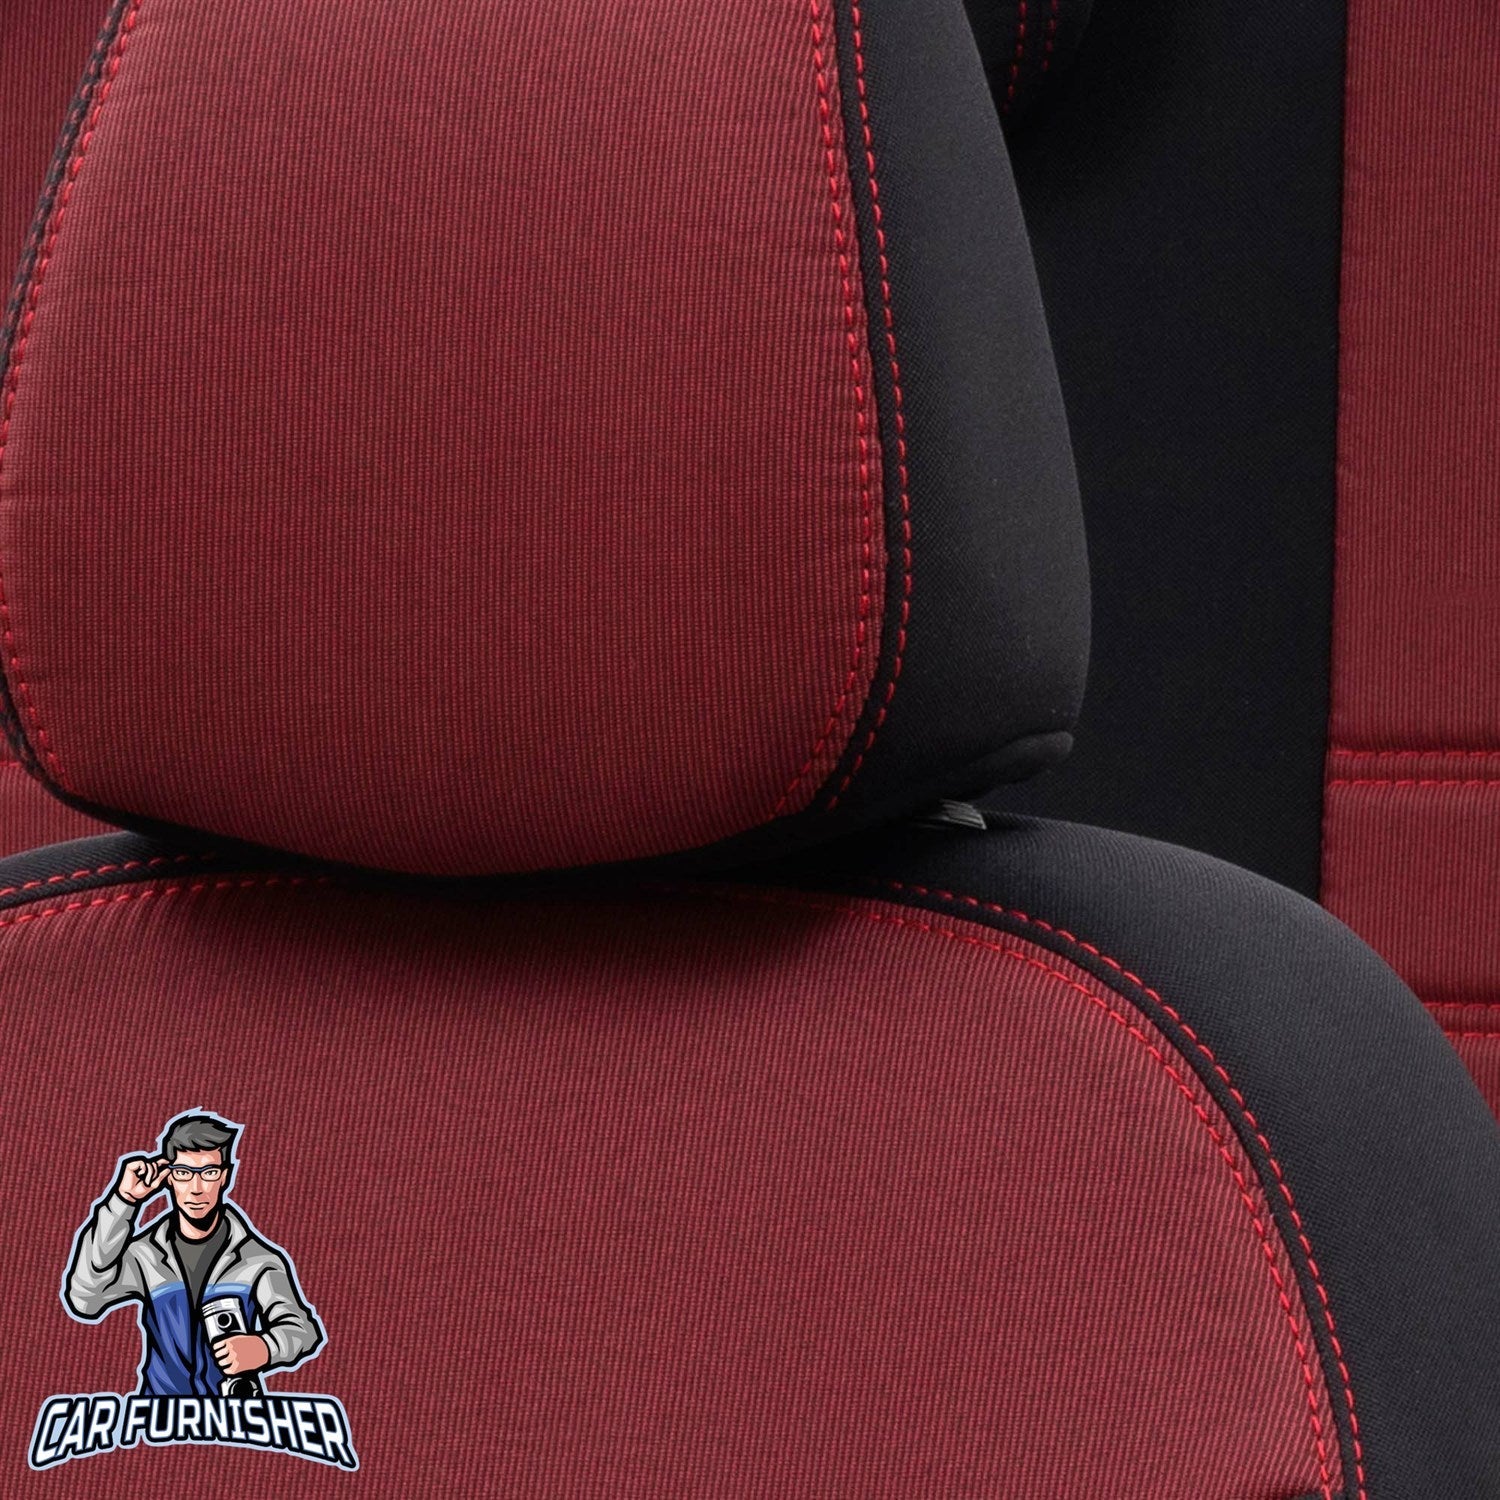 Kia Rio Seat Covers Original Jacquard Design Red Jacquard Fabric